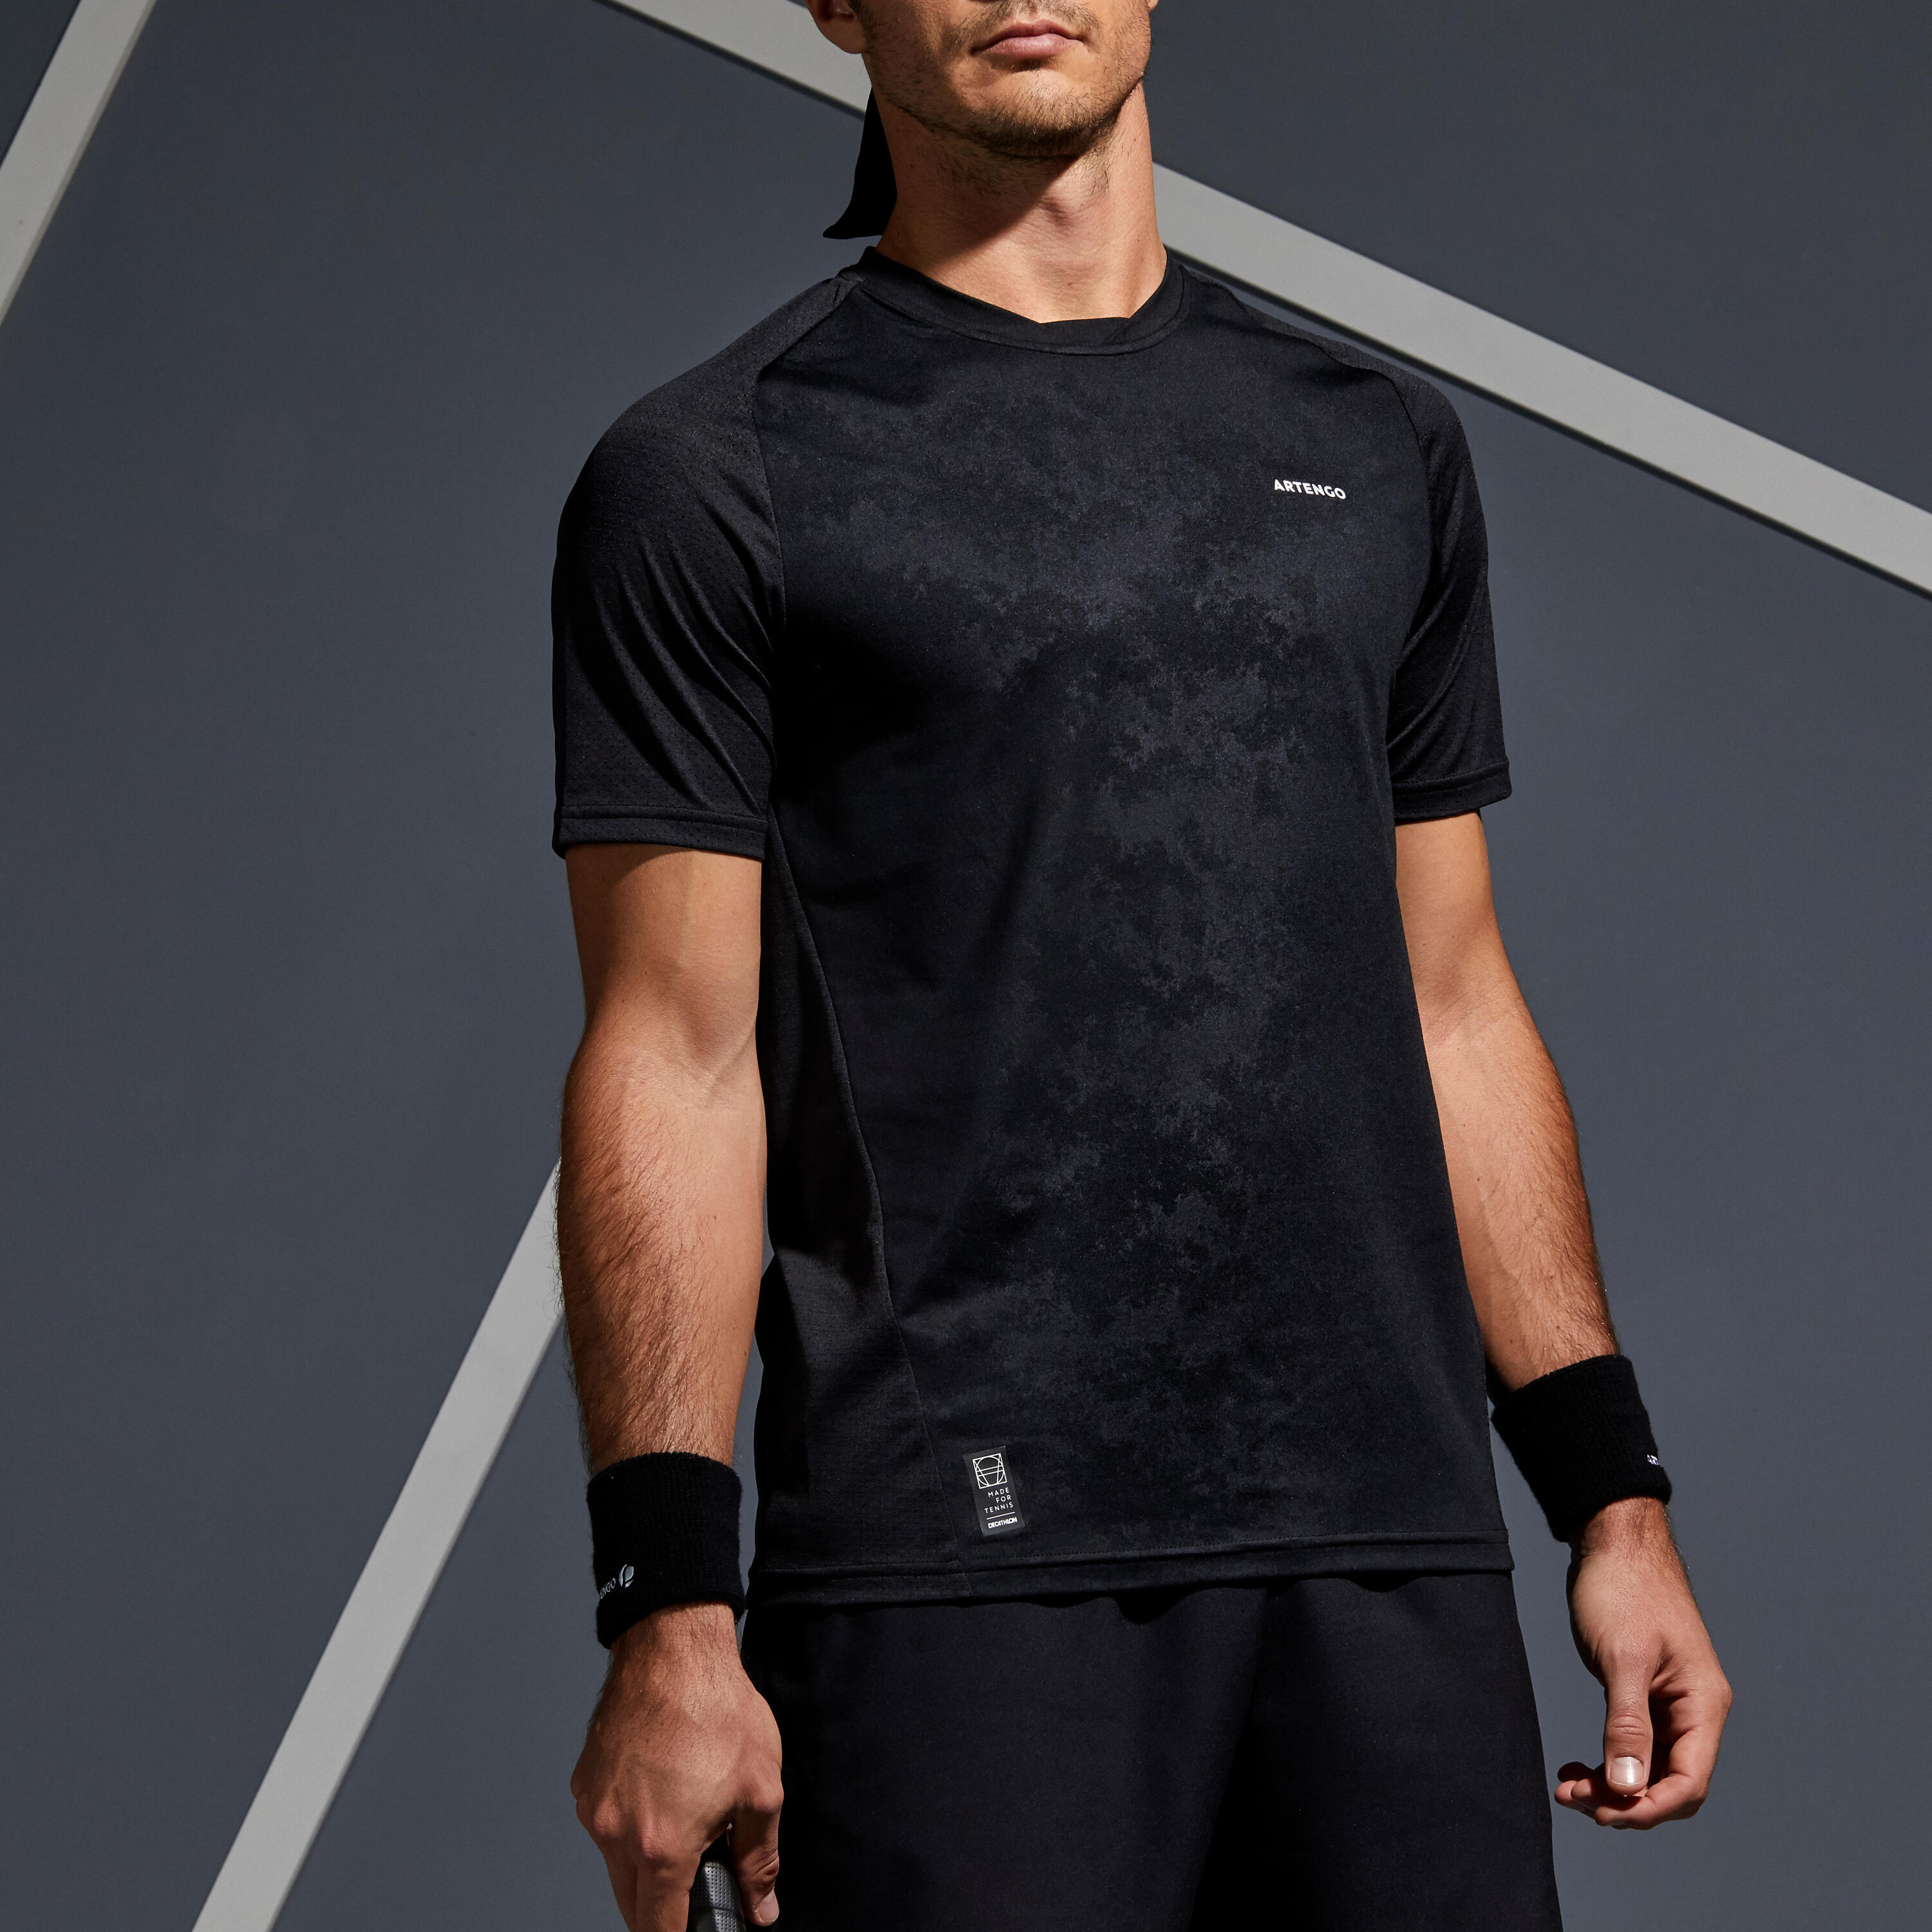 ARTENGO Men's Short-Sleeved Tennis T-Shirt TTS 500 Dry - Black/Grey